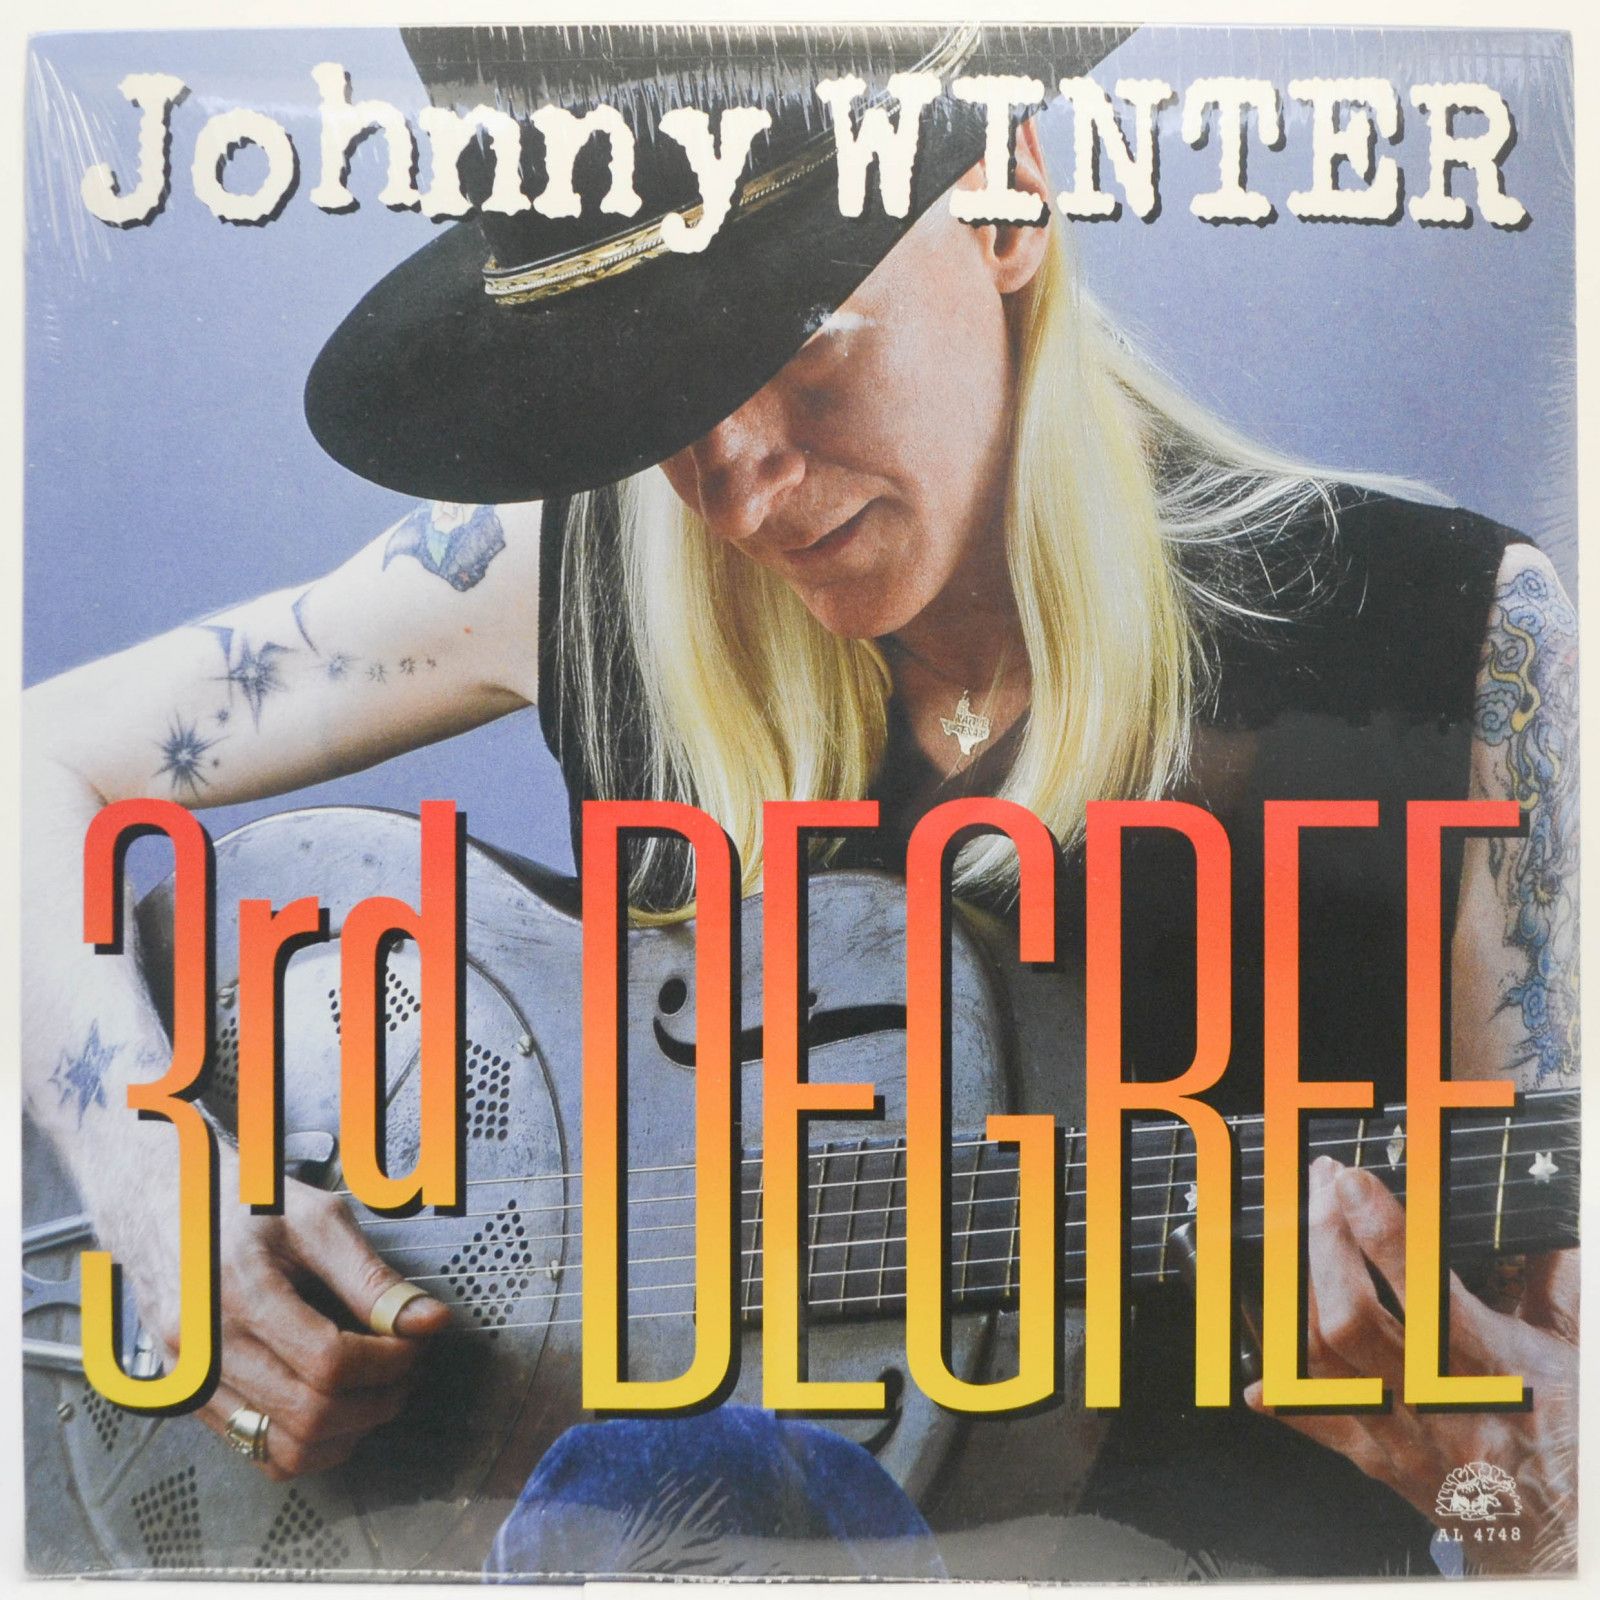 Johnny Winter — 3rd Degree (USA), 1986